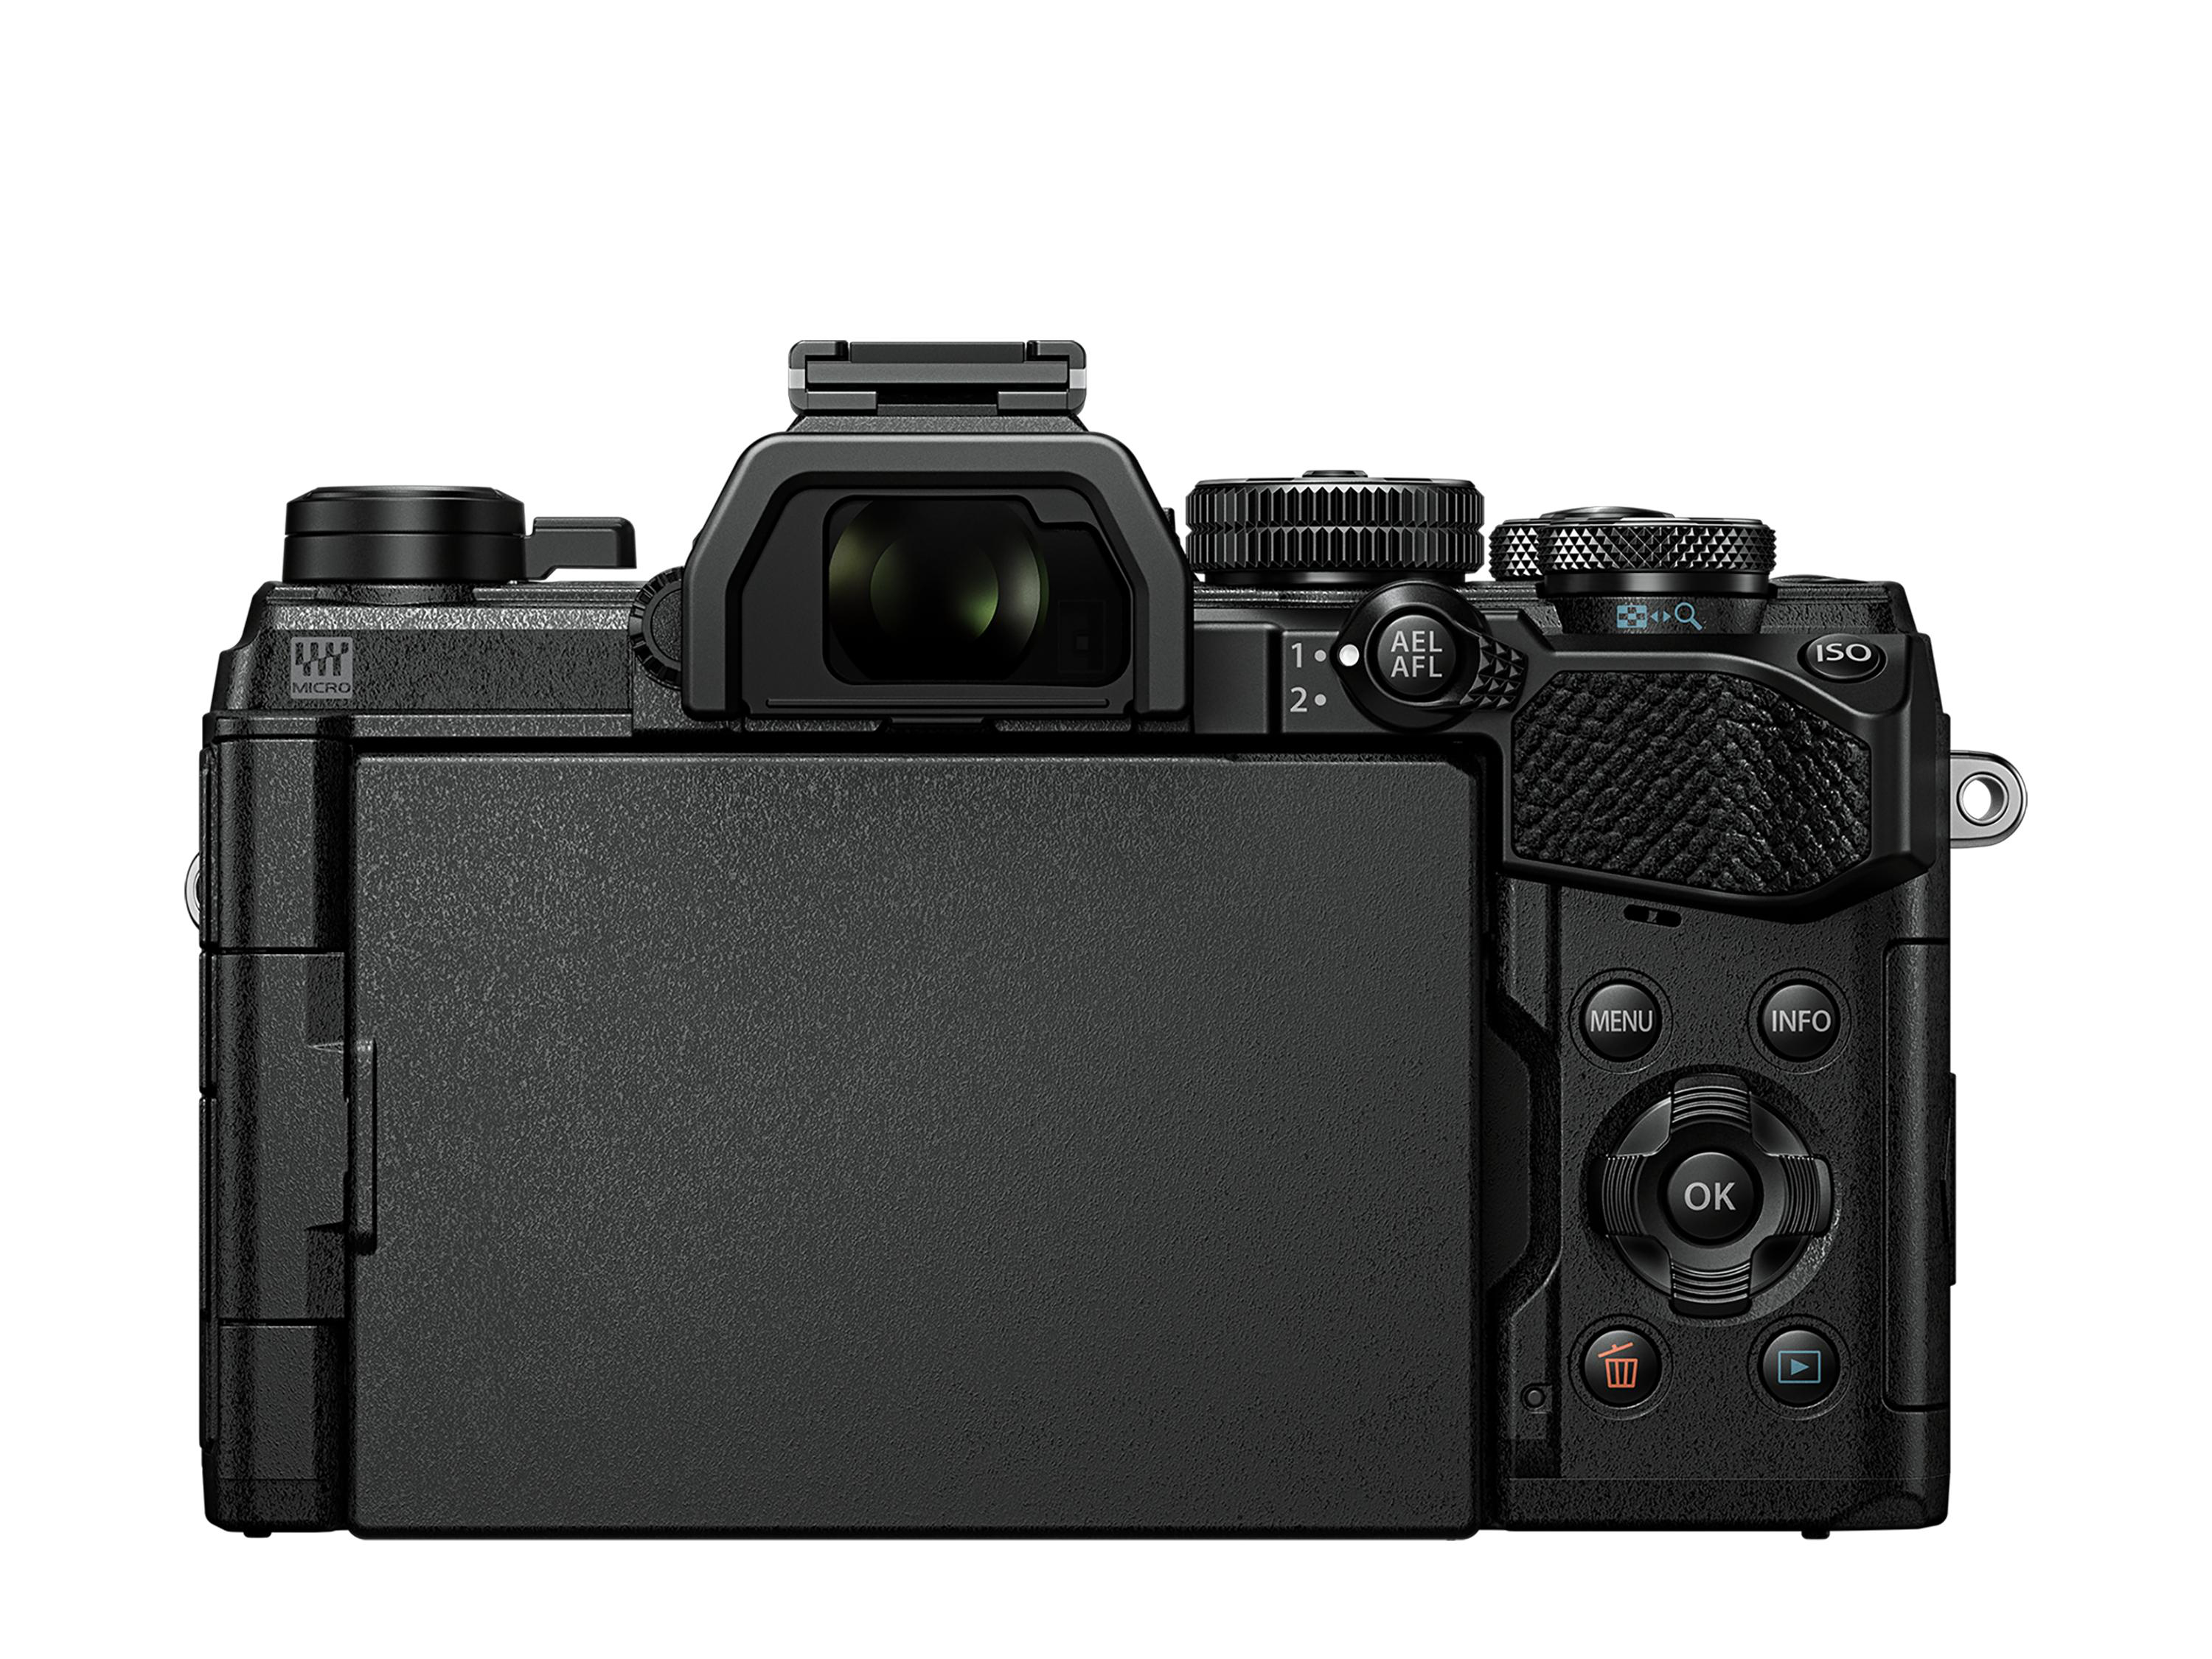 7,6 OM , Display Kit 12-45 Touchscreen, cm SYSTEM OM-5 Objektiv Systemkamera mit WLAN mm